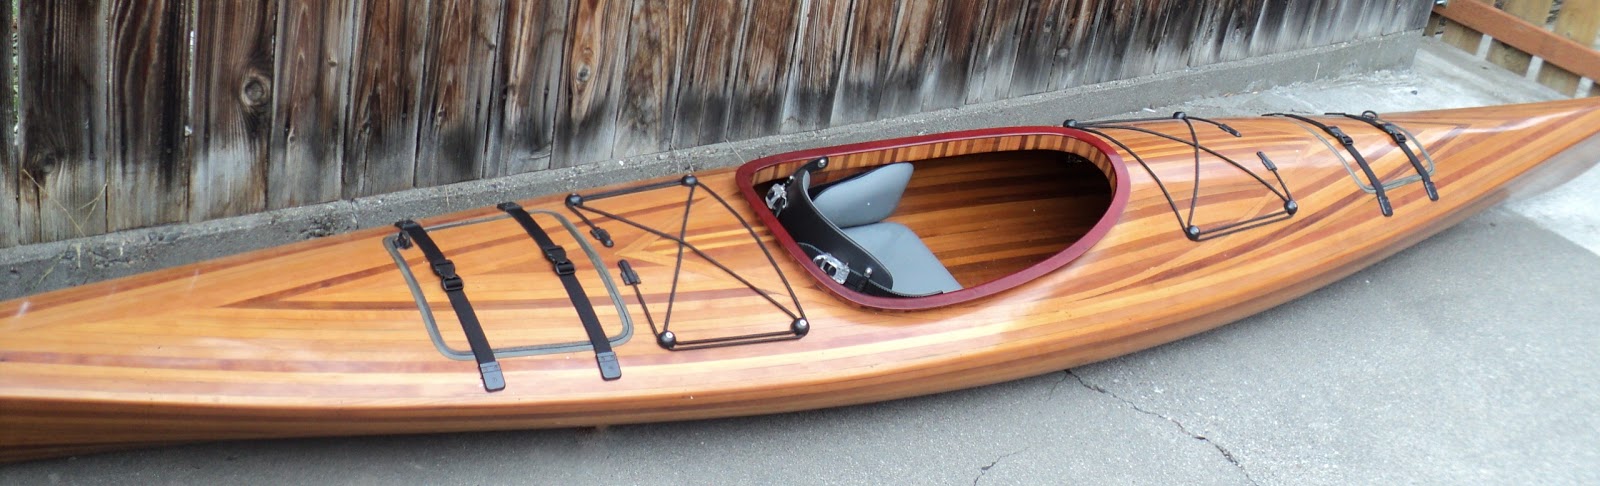 kayaks for sale in panama city florida – kayak explorer